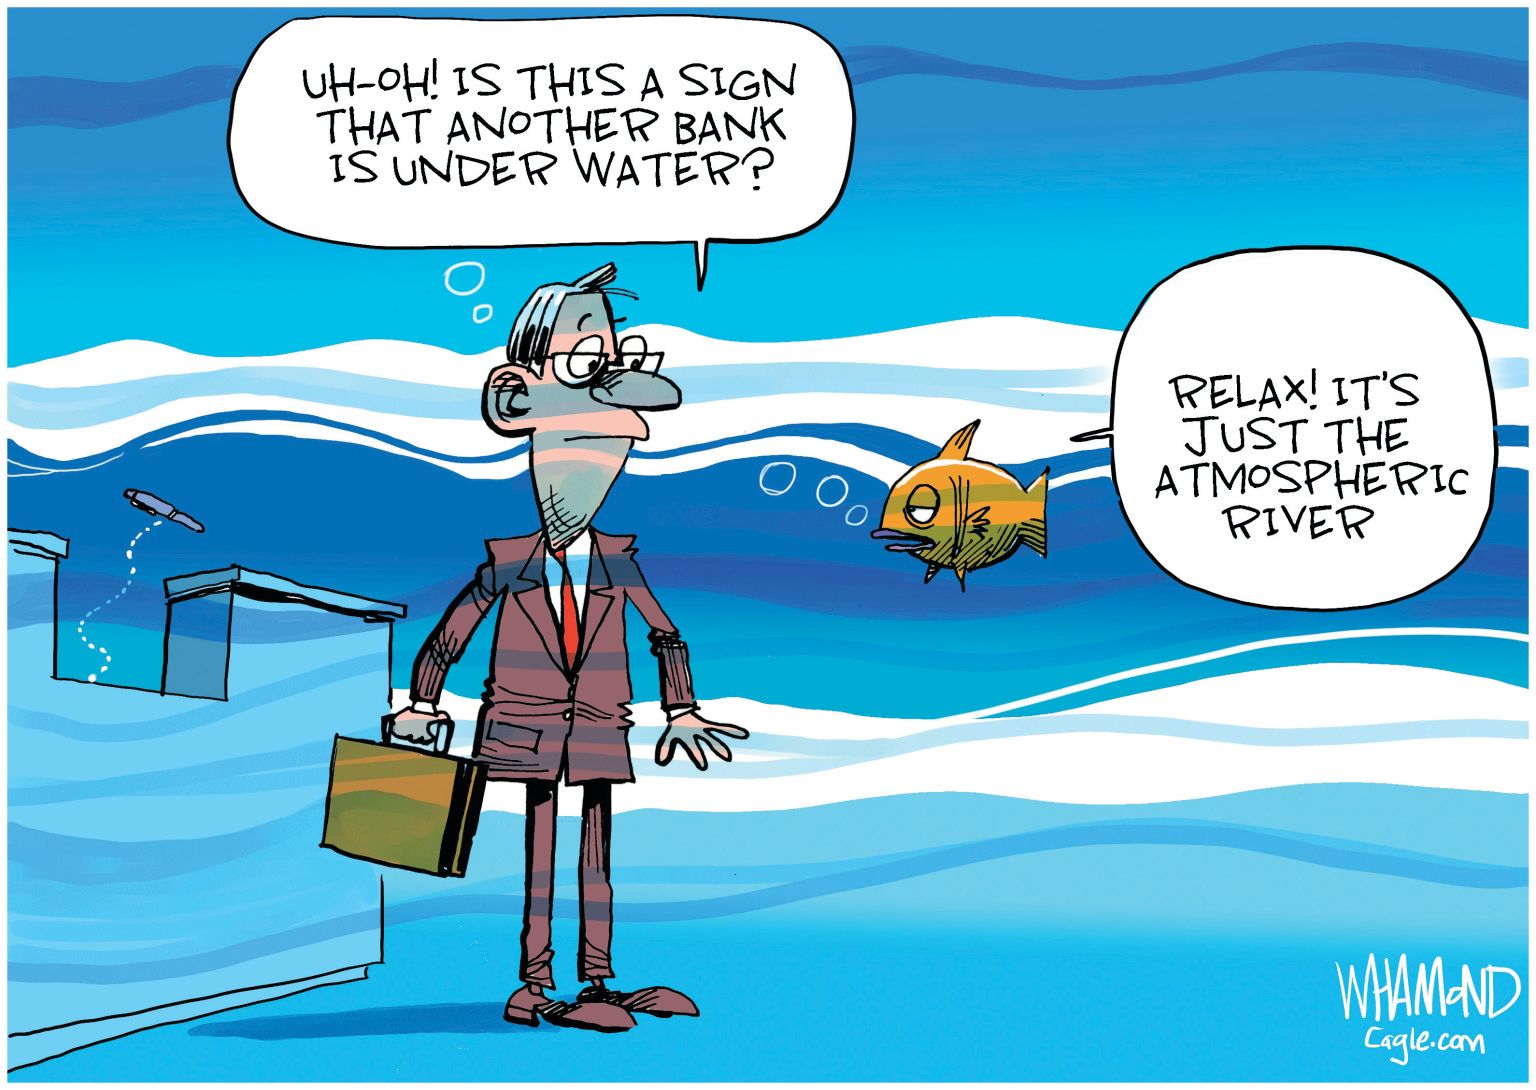 newsjustin.press - Banks Under Water - editorial political cartoon